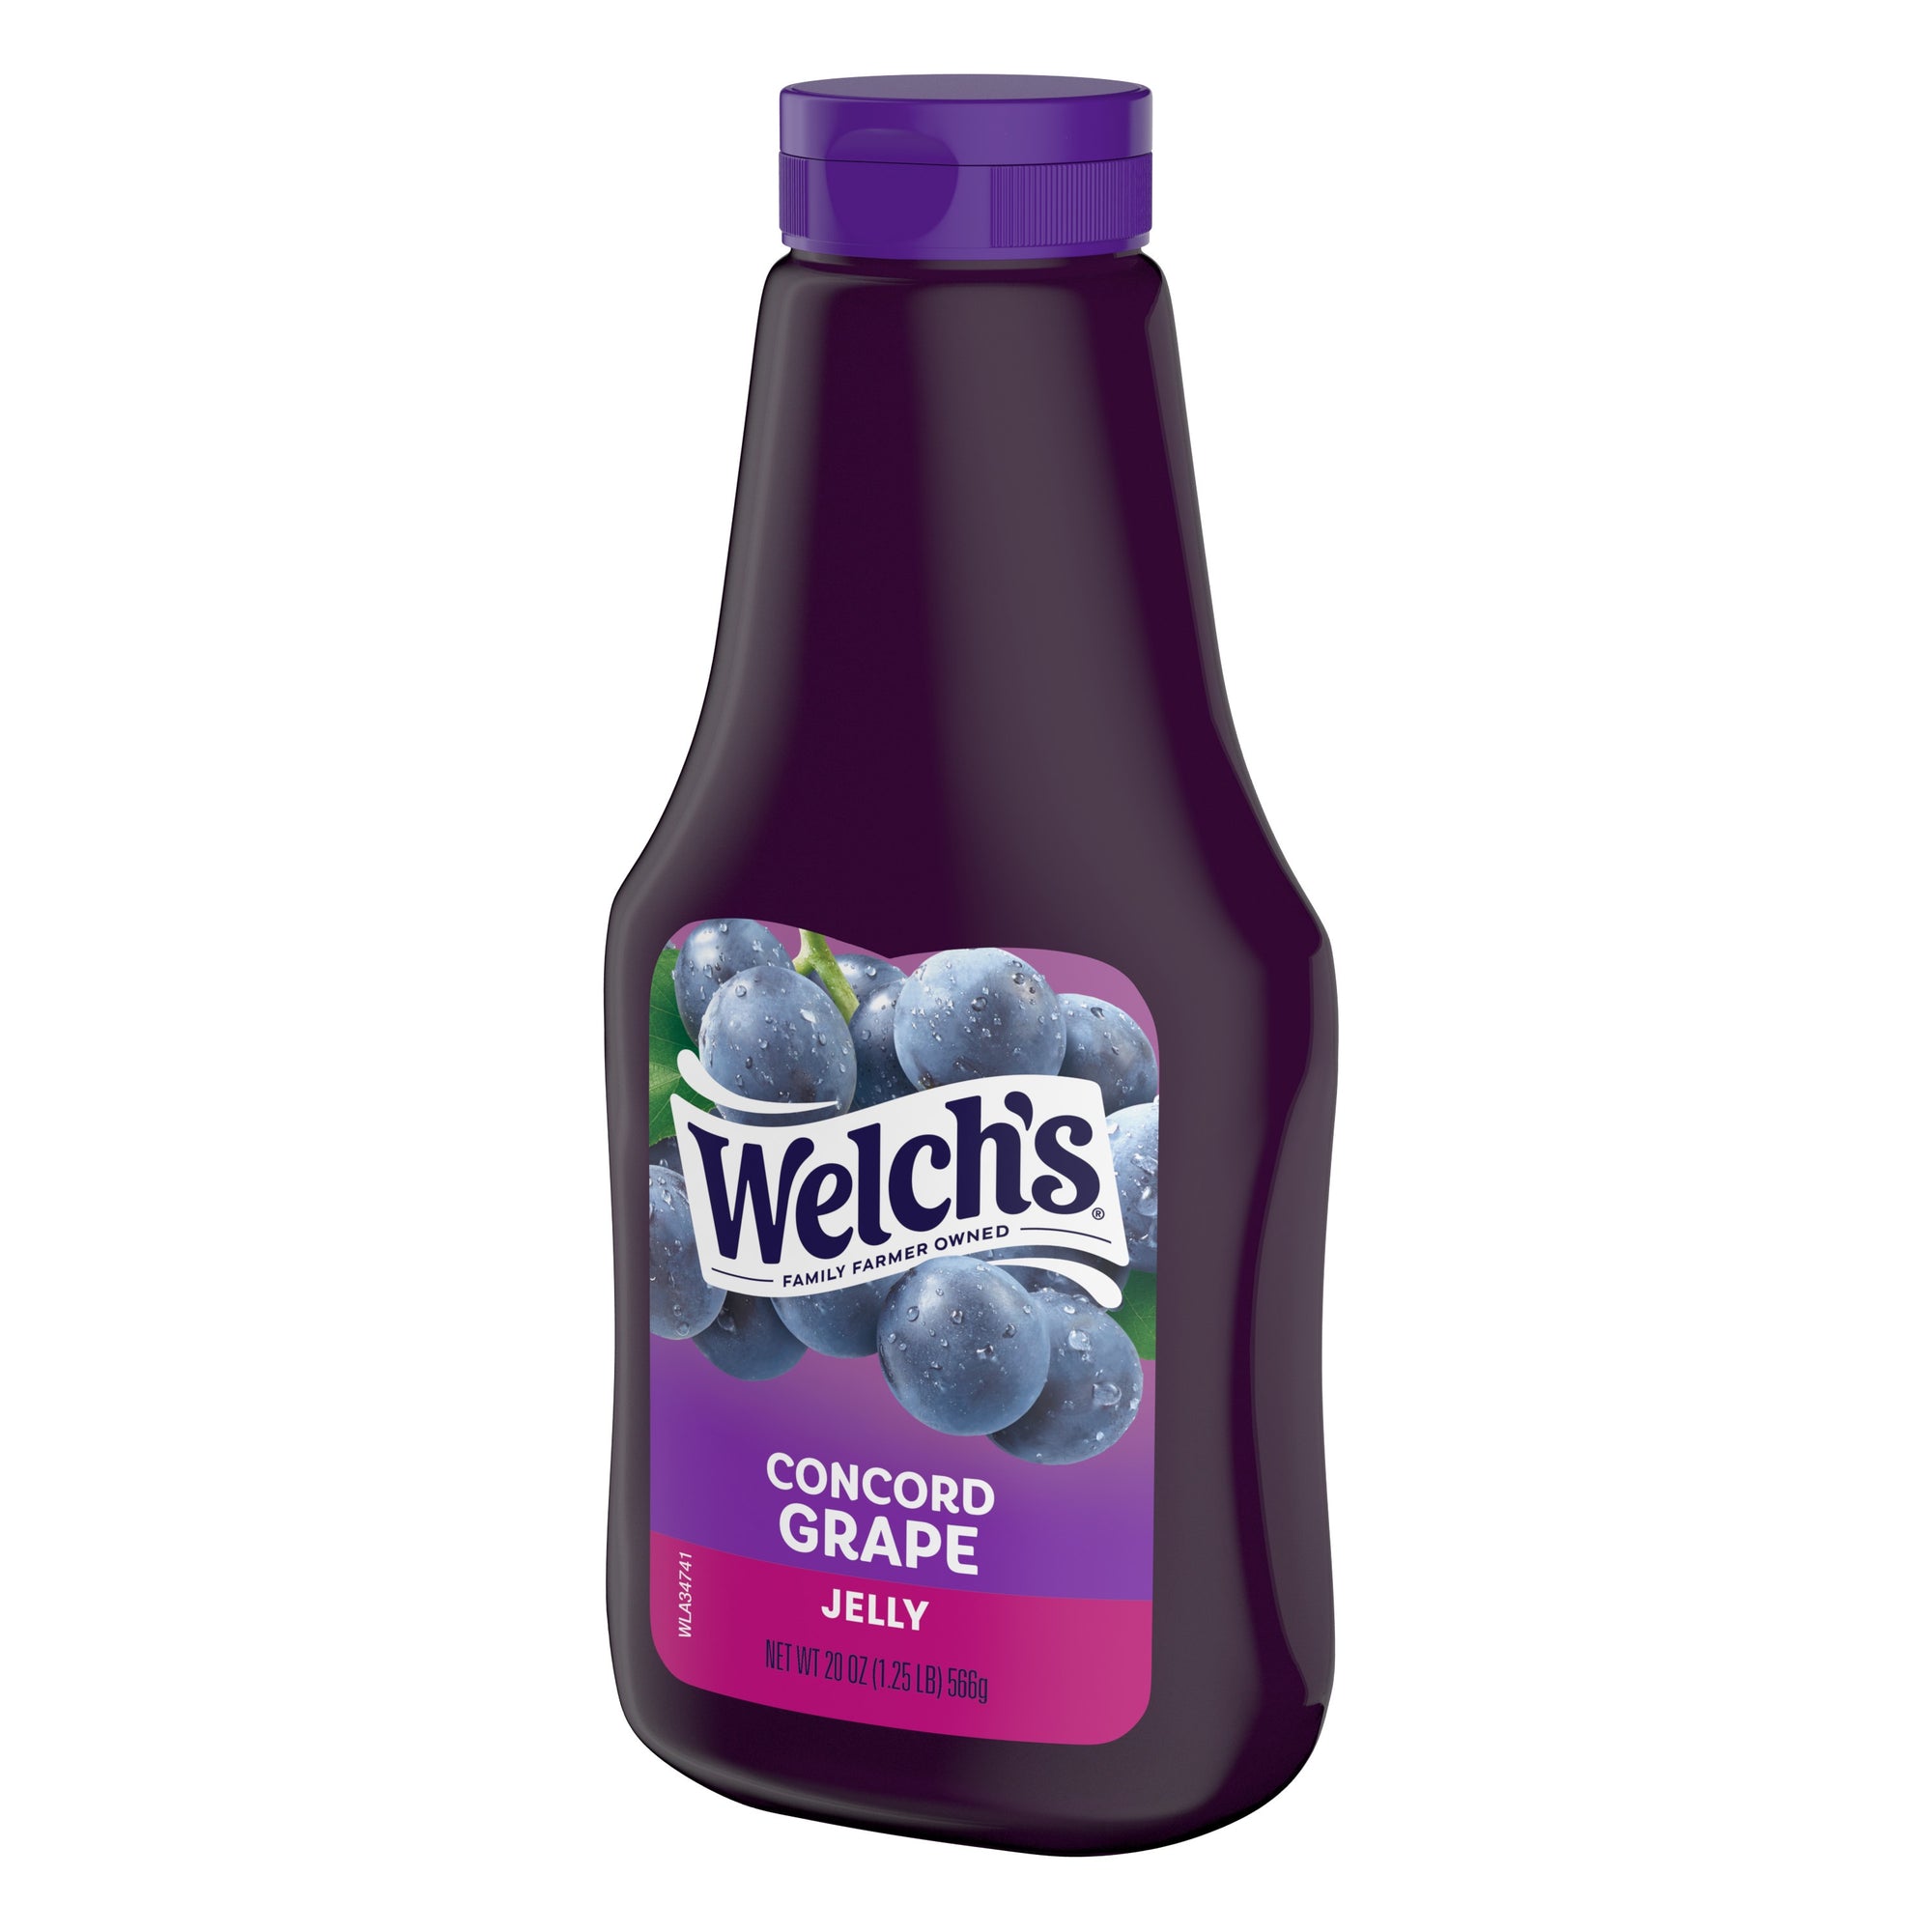 Welch's Concord Grape Jelly, 20 Oz